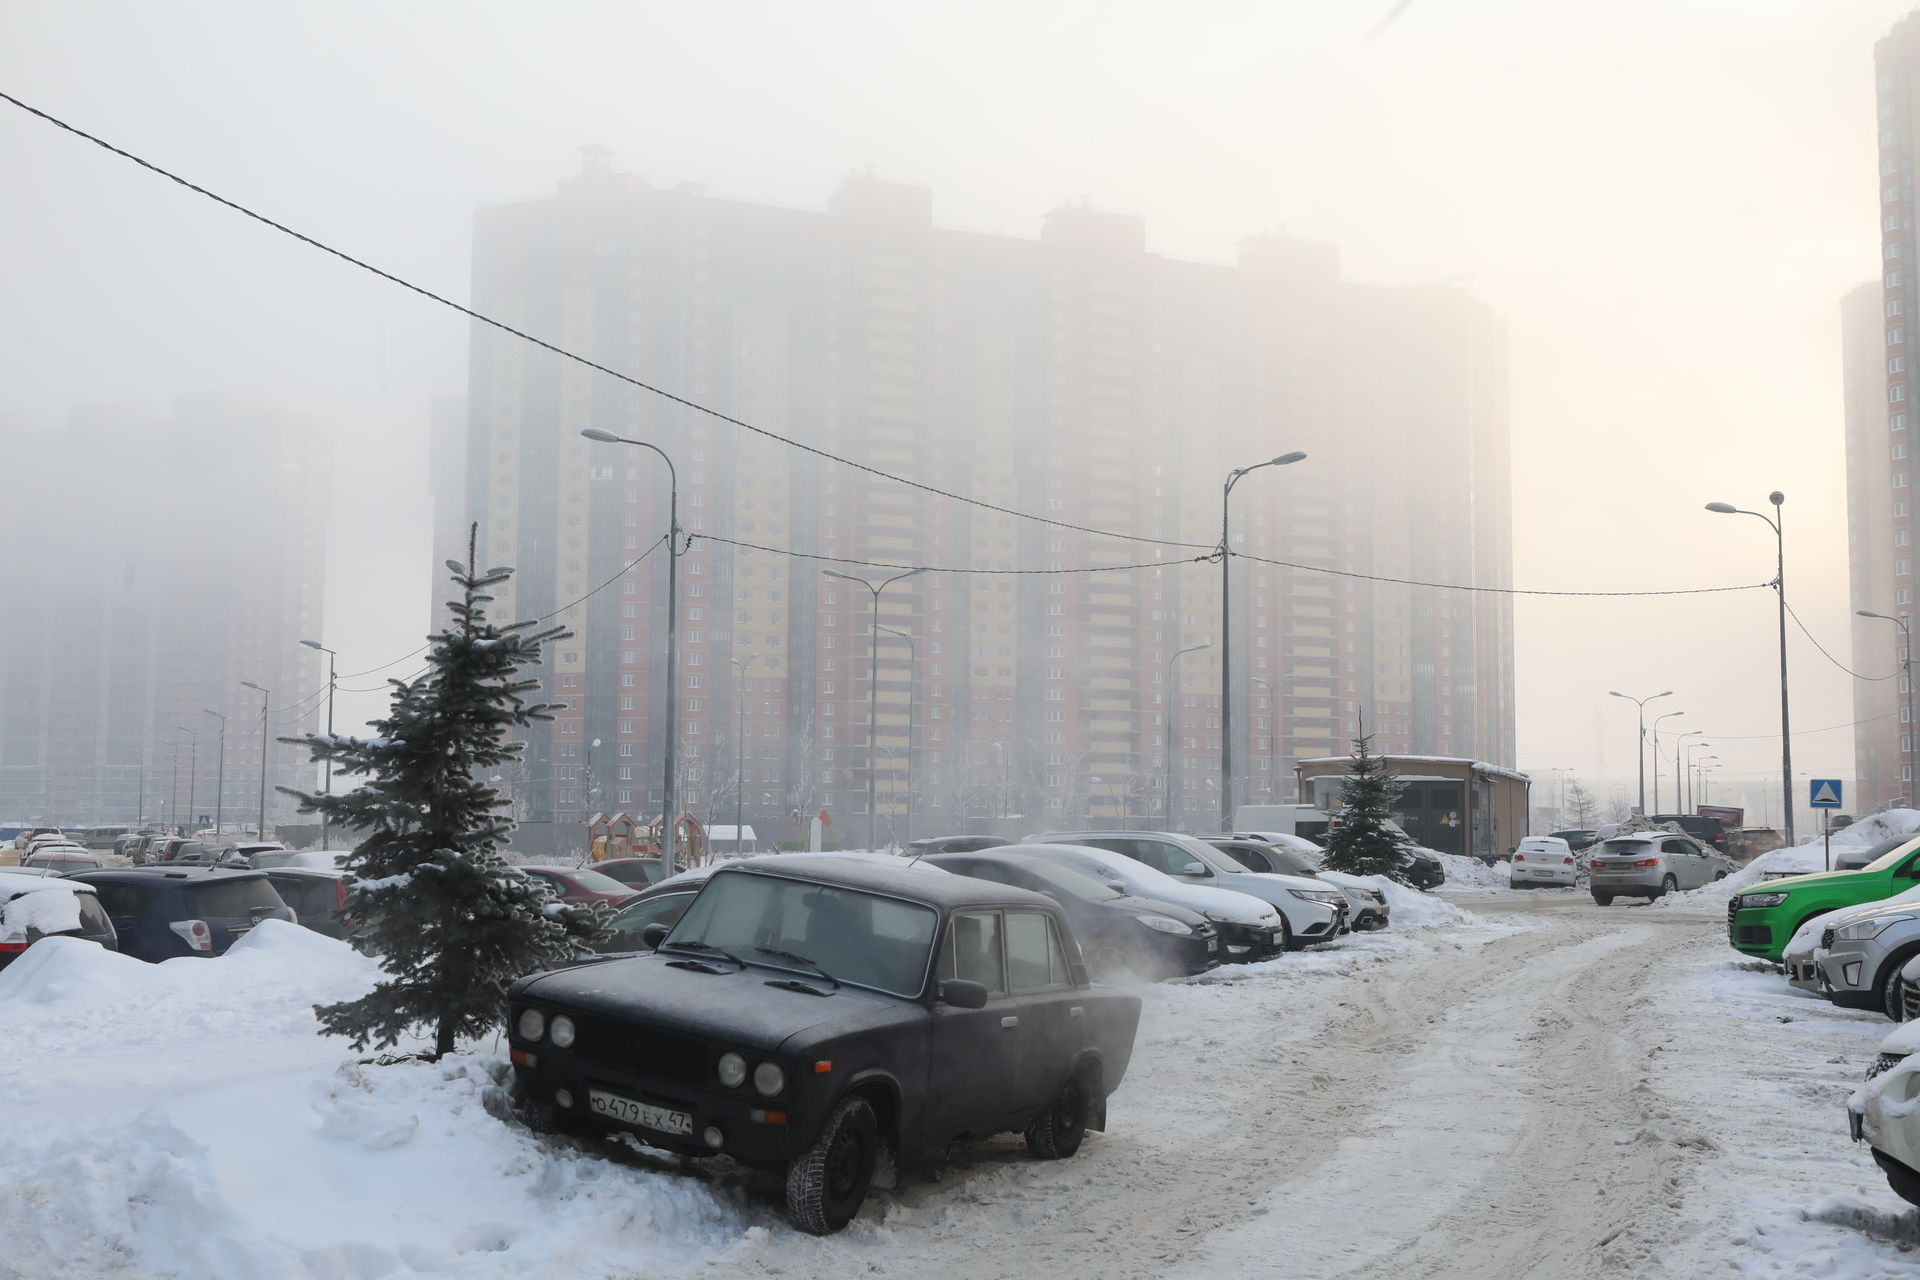 6 января 2023 г. Туман зимой в городе. Зимний туман в городе. Туманная зима город. Туман зима город.